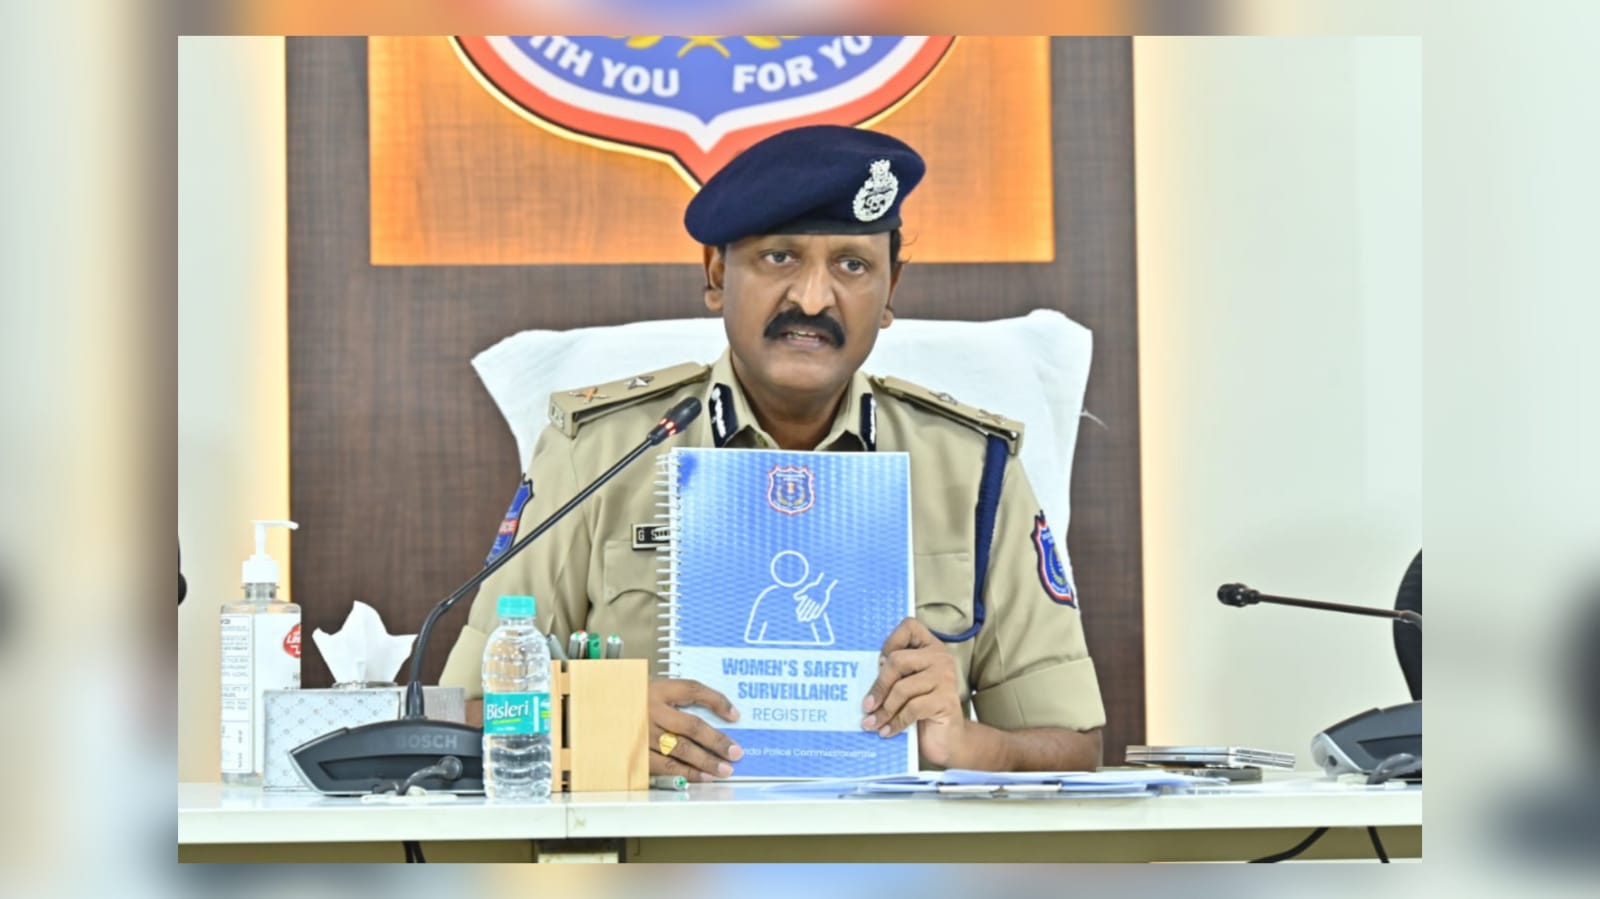 Rachakonda police bolsters women's safety with innovative surveillance register